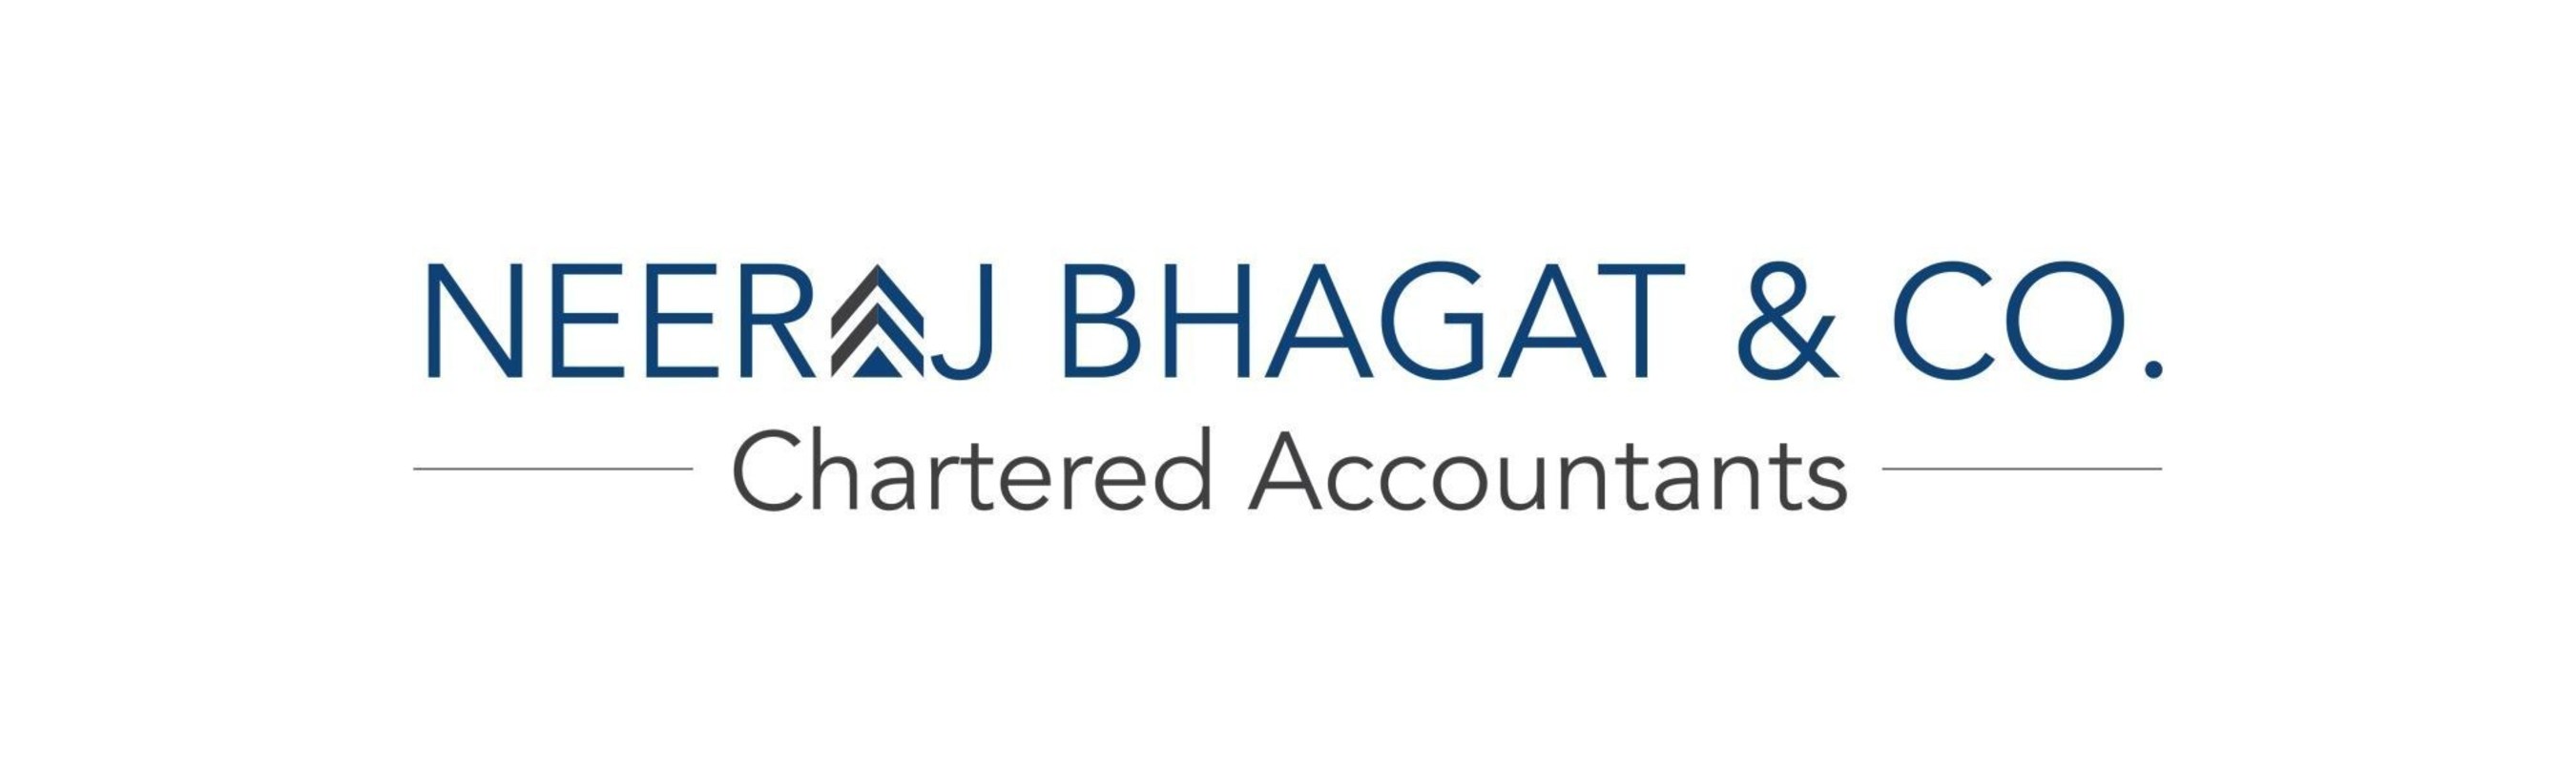 Neeraj Bhagat & Co. Logo (PRNewsFoto/Neeraj Bhagat & Co.)